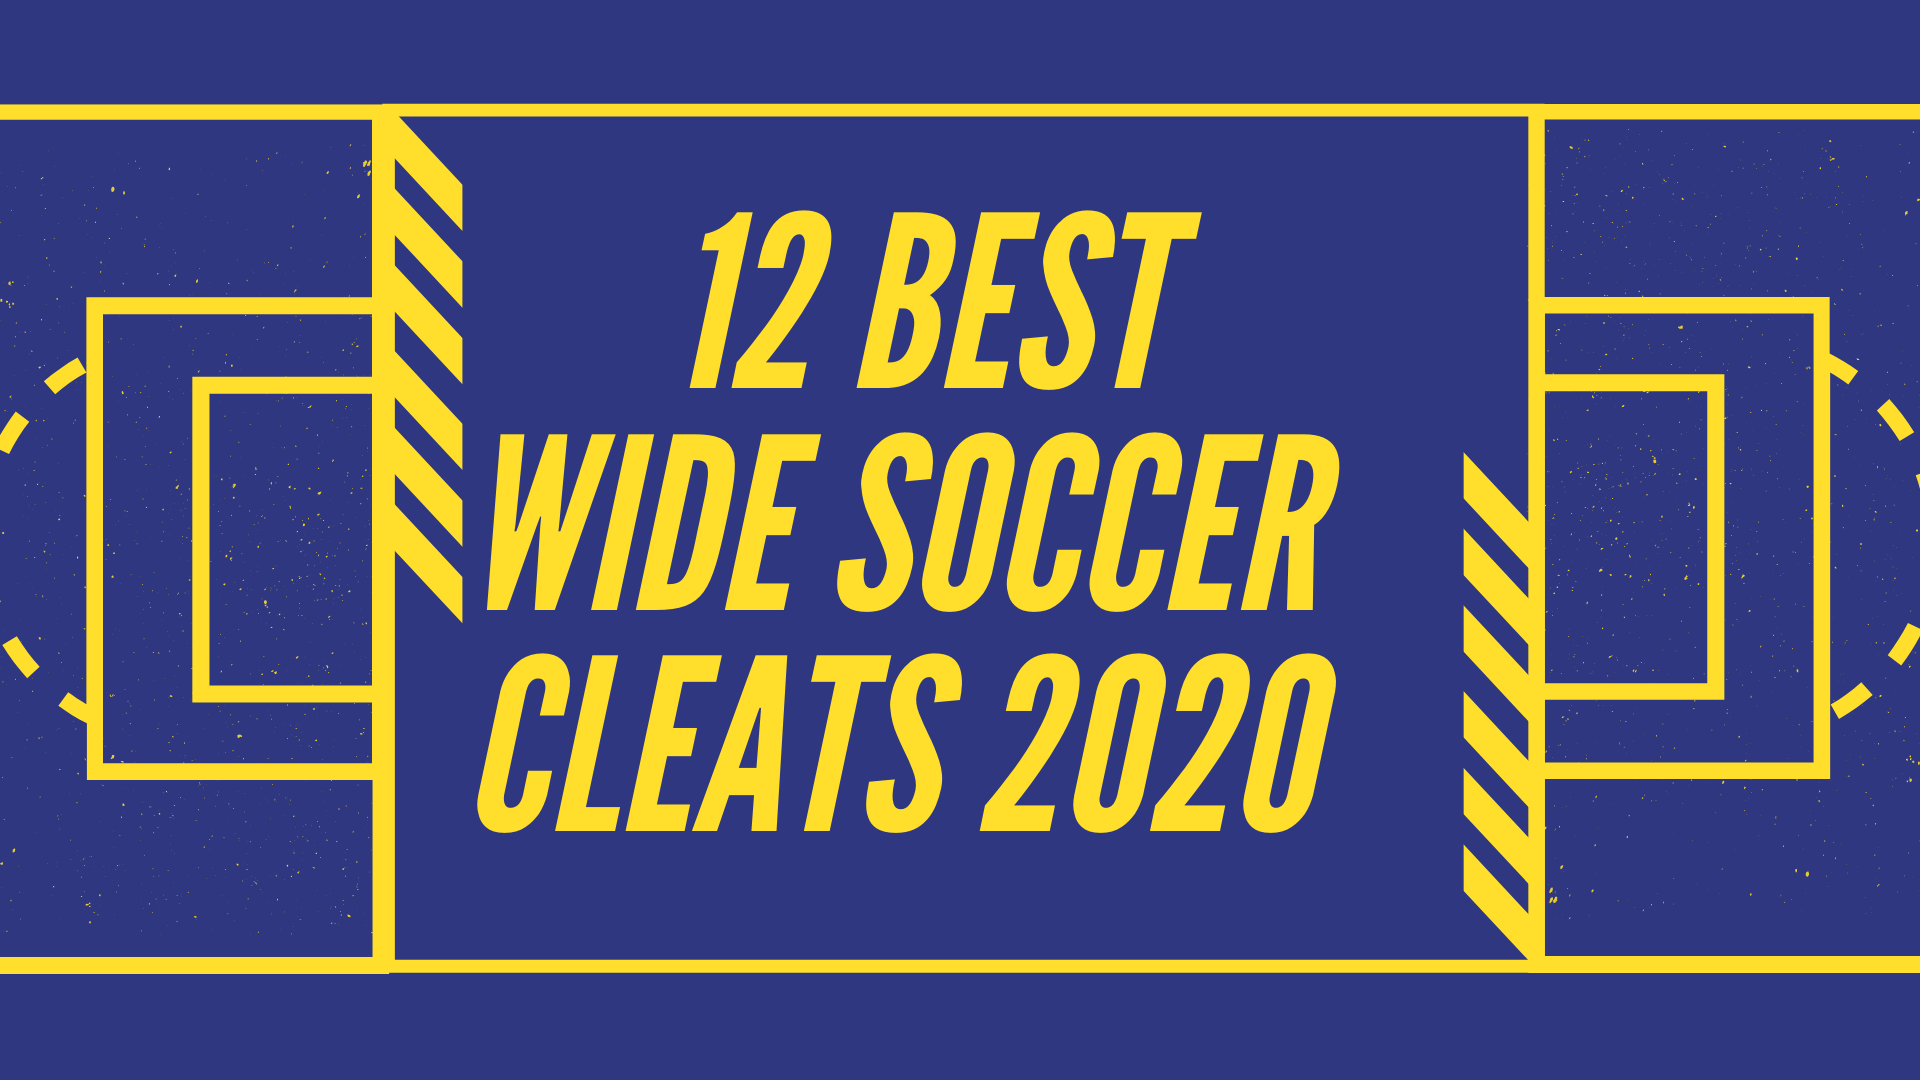 best soccer cleats for narrow feet 2018